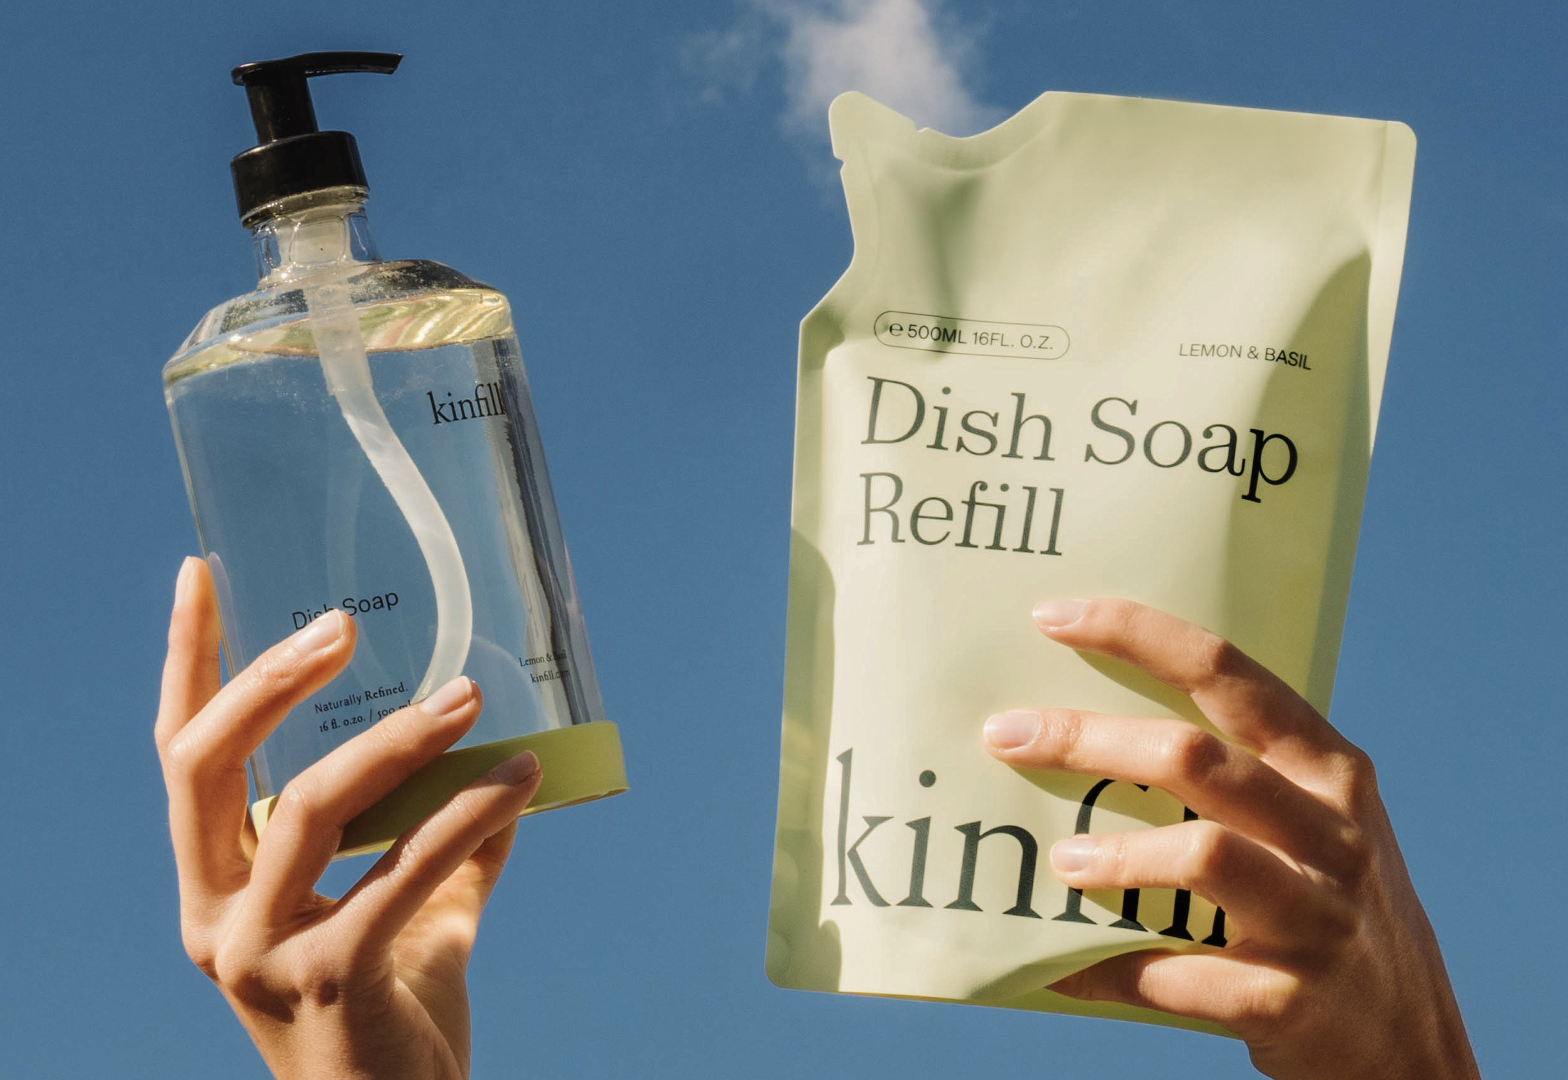 Dish Soap Lemon & Basil – kinfill care